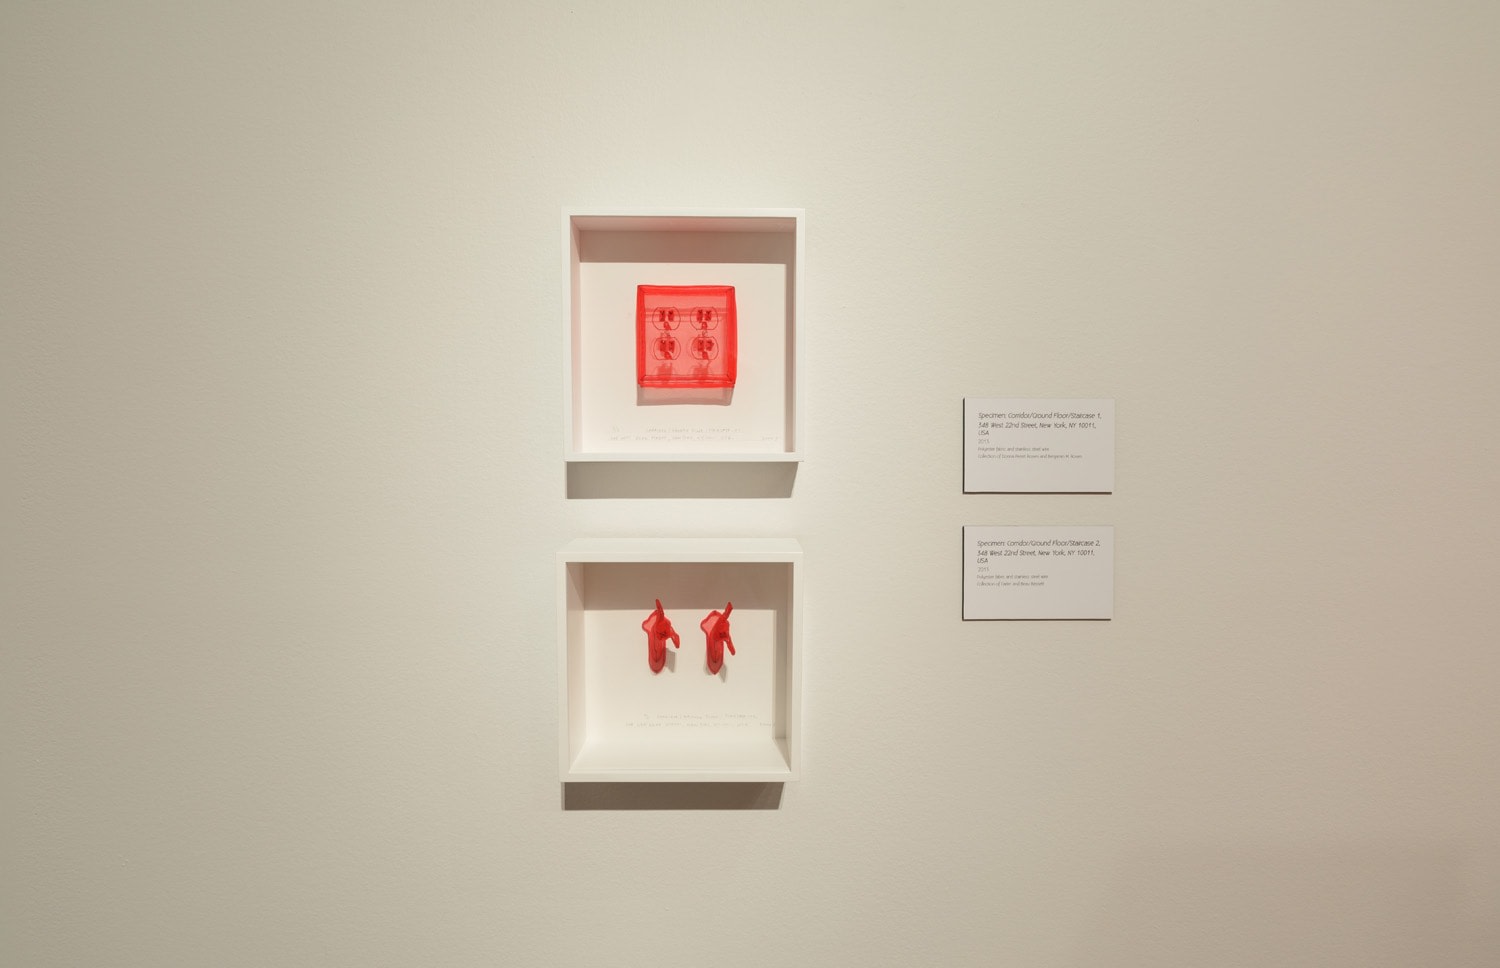 DO HO SUH, Installation view, Frist Art Museum,&nbsp;Do Ho Suh: Specimens, Oct. 12, 2018 - Jan. 6, 2019